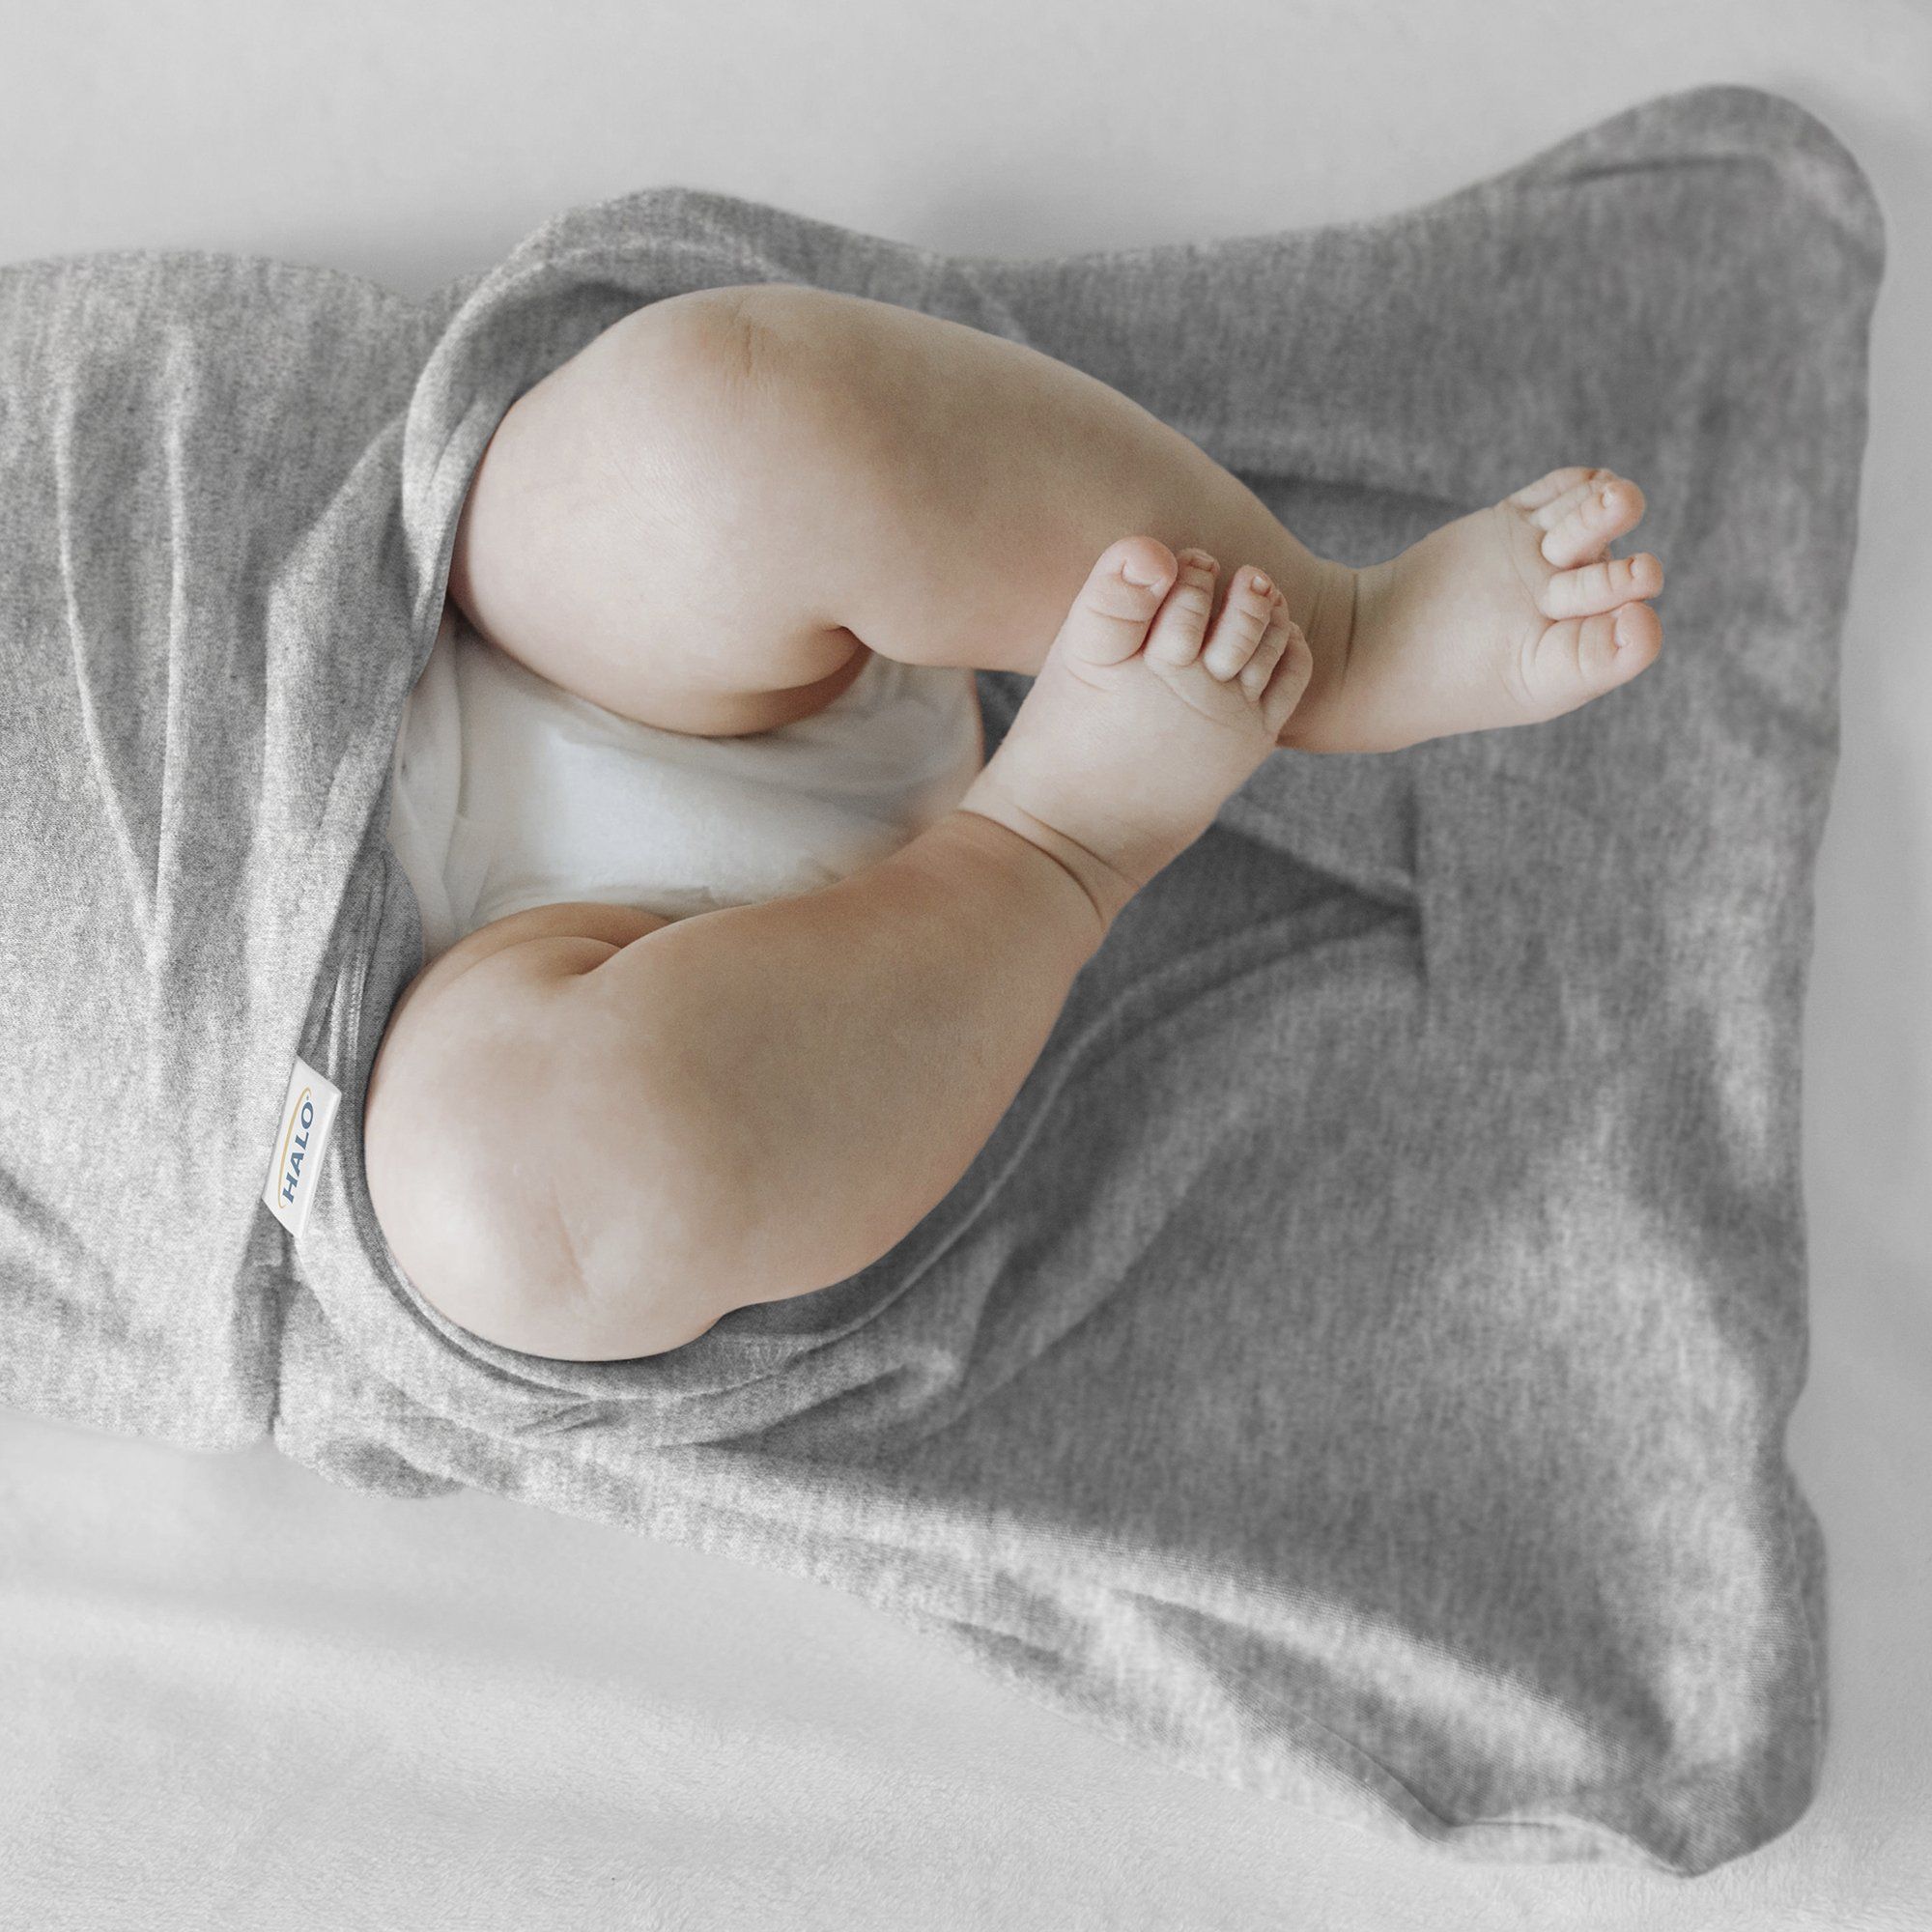 HALO SleepSack Swaddle, Heather Gray, Newborn (0 to 3 Months) - 1 ct